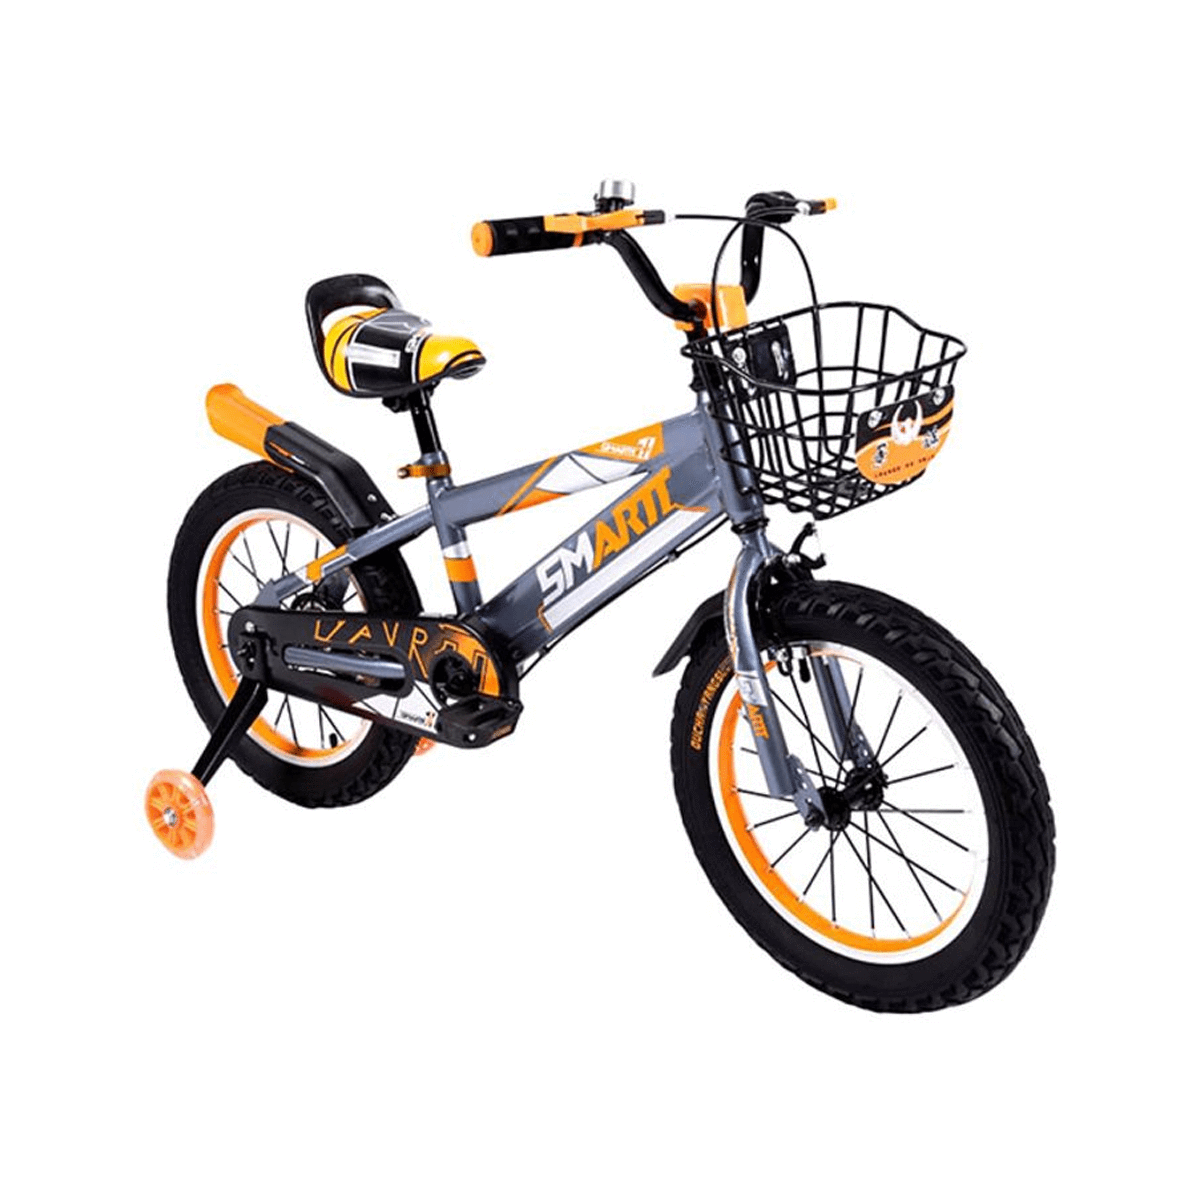 DESERT STAR Wheels Kids Bicycle 16inch